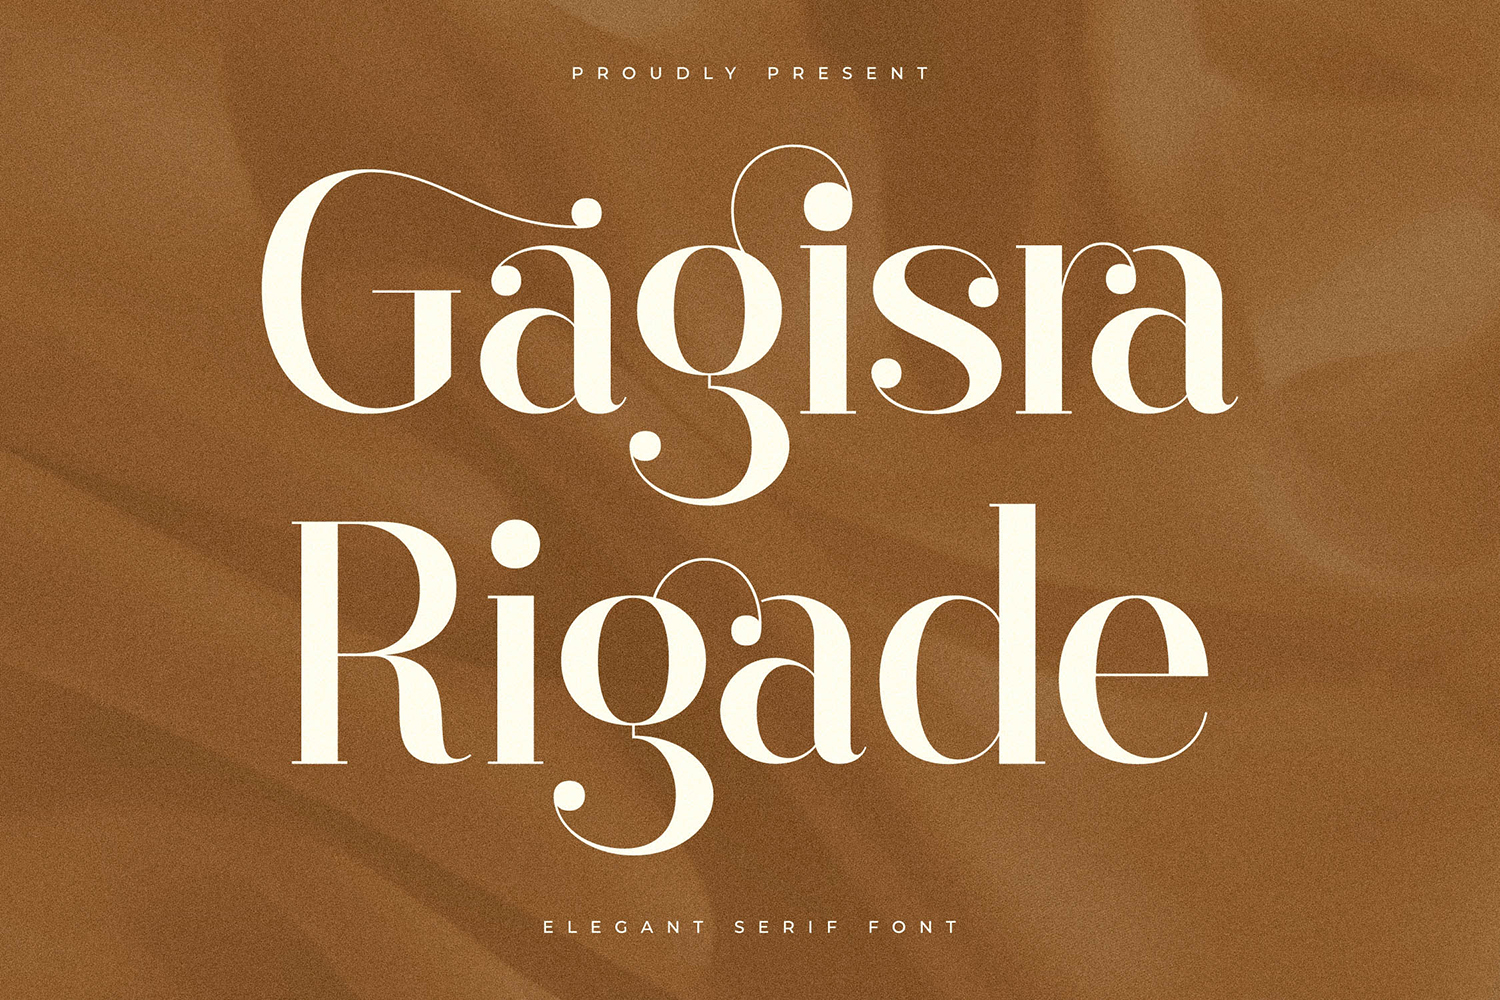 Gagisra Rigade Free Font